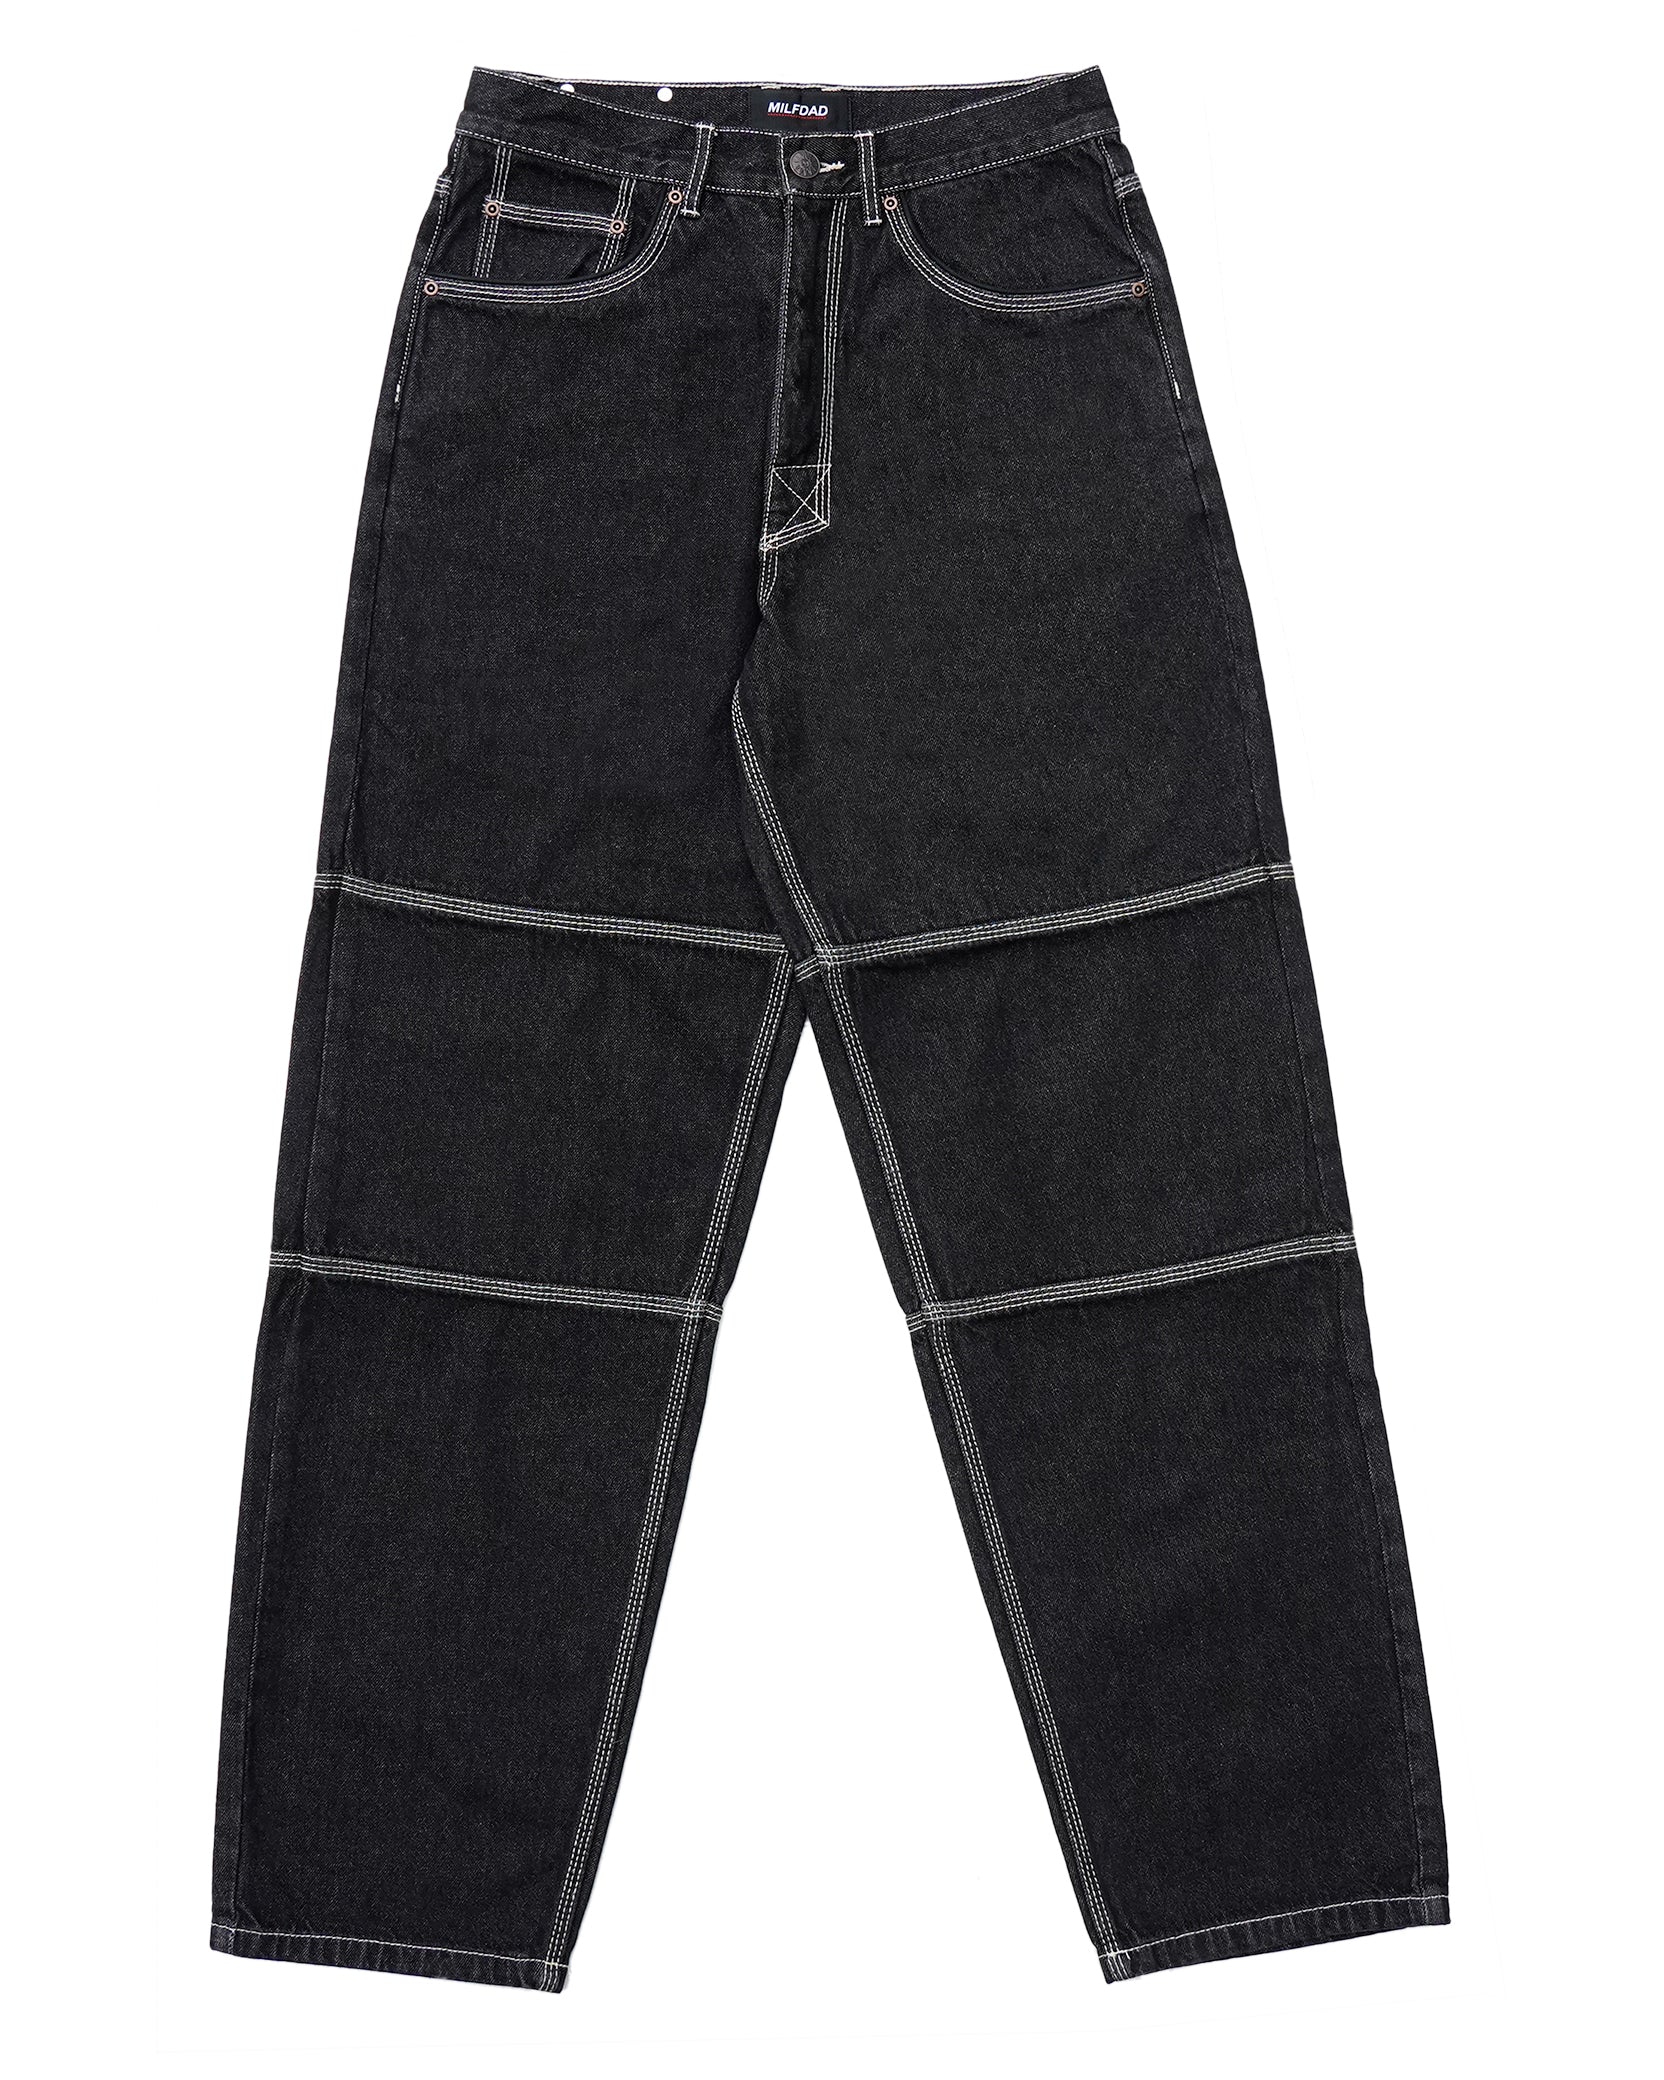 Men's Skinny Stitching Color Jeans Fashion Casual Patchwork Denim Pants  Slim Fit Demin Pencil Pants (28,Blue 2) at Amazon Men's Clothing store